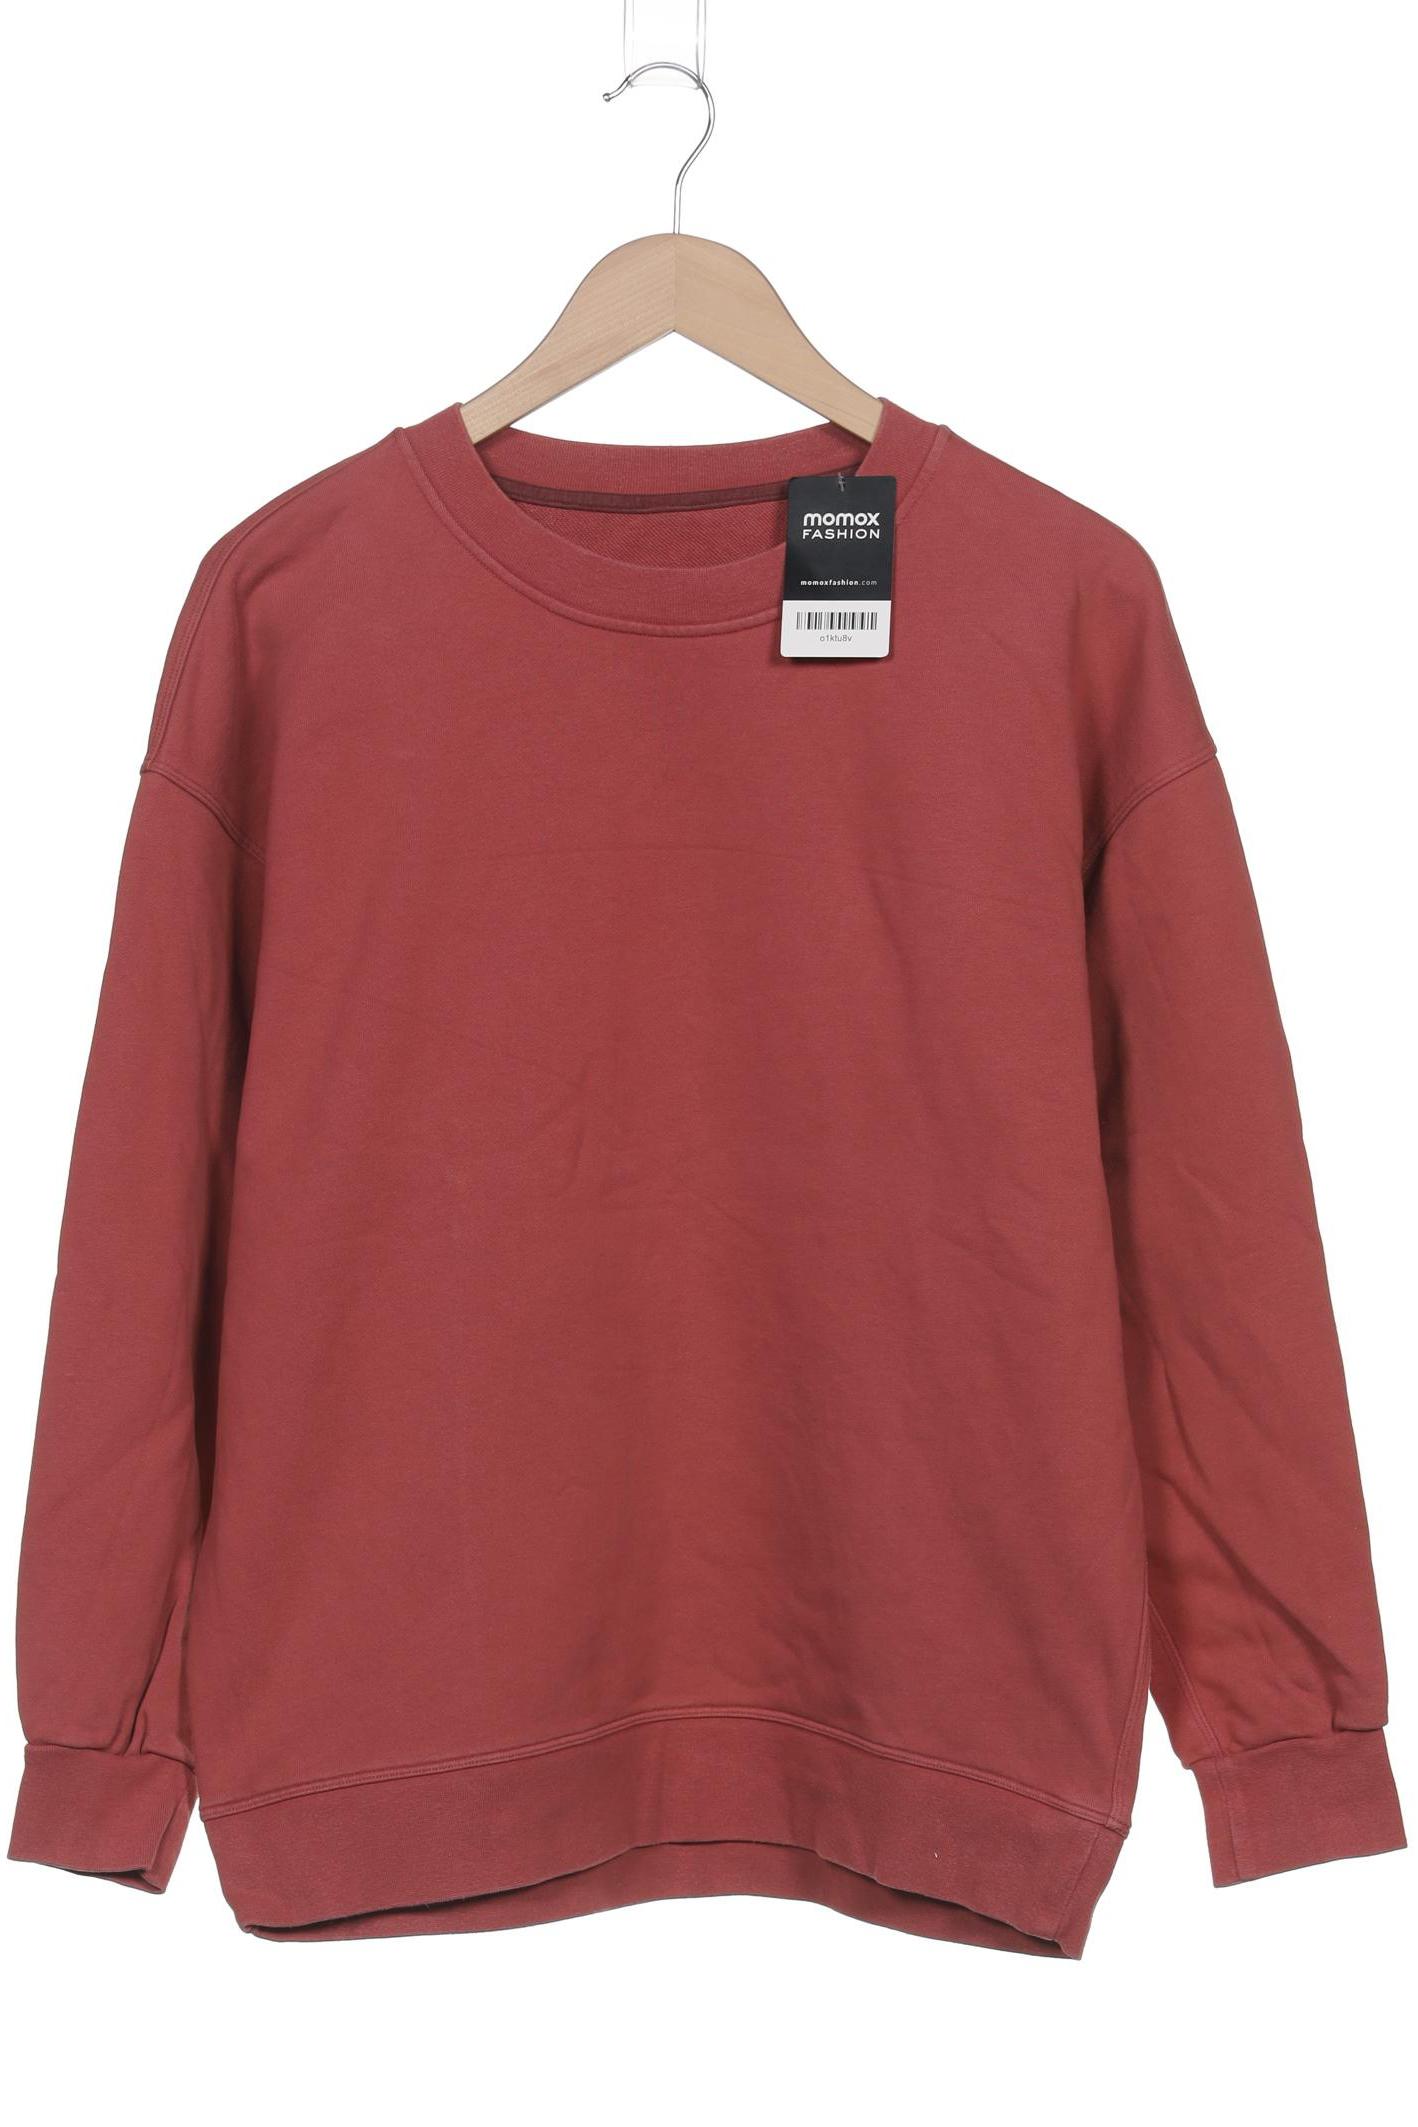 Lululemon Damen Sweatshirt, rot, Gr. 44 von Lululemon